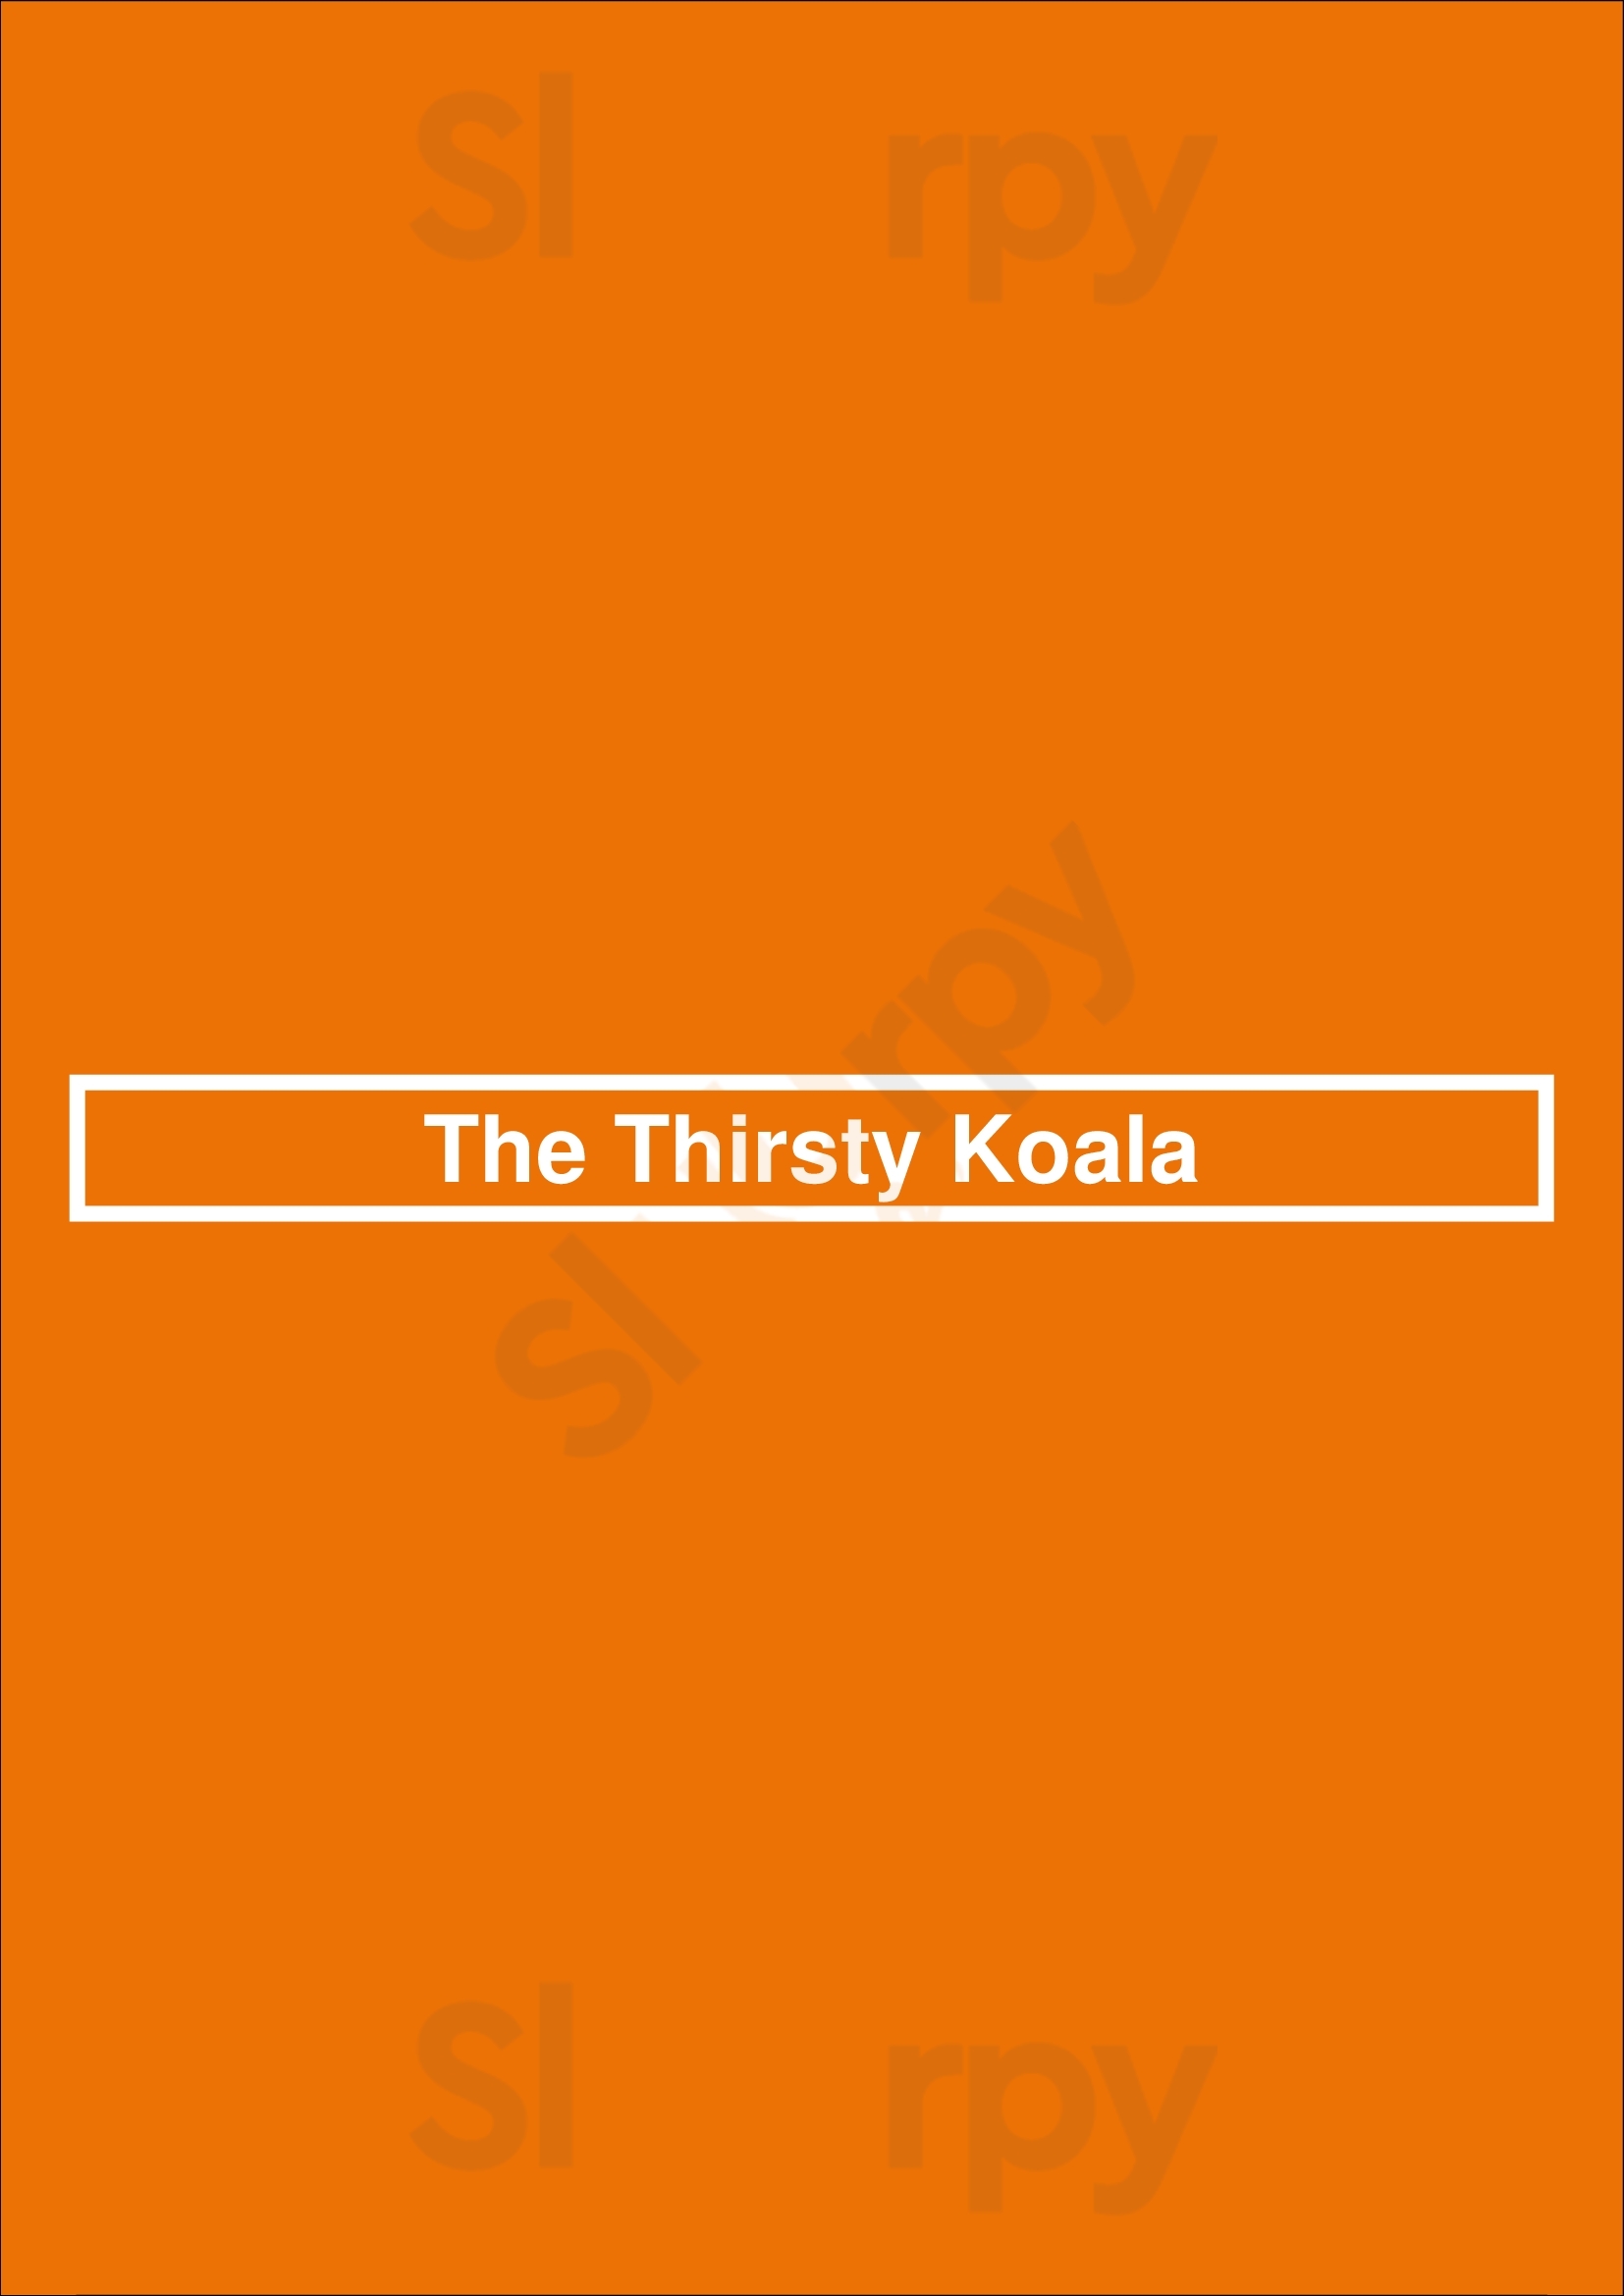 The Thirsty Koala Astoria Menu - 1